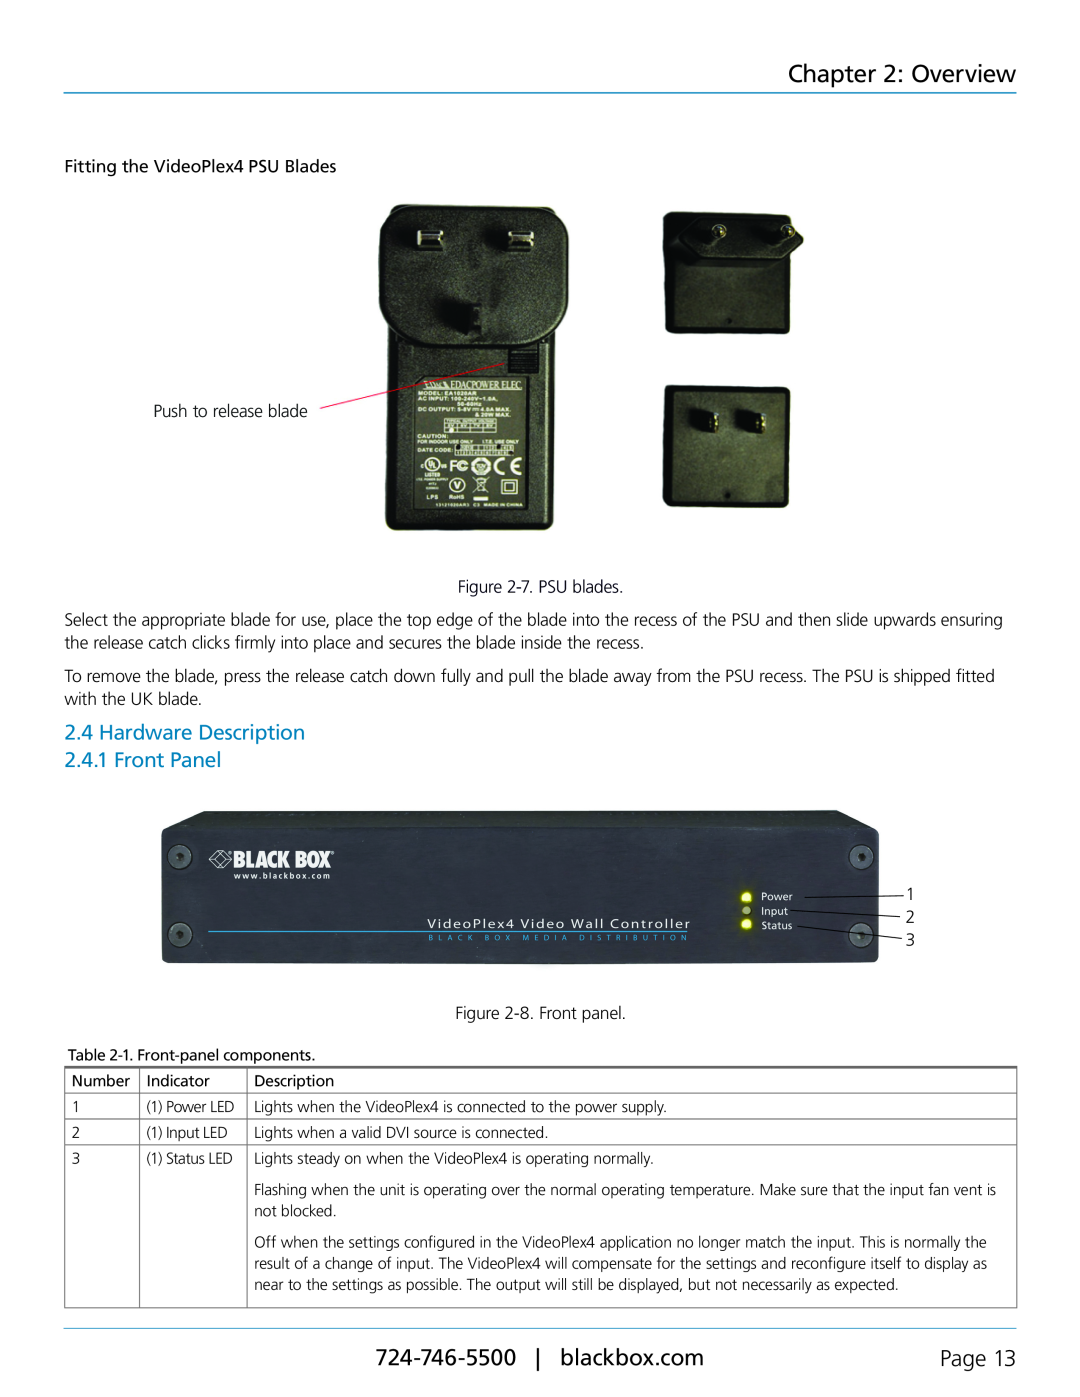 Black Box VideoPlex4 Video Wall Controller, VSC-VPLEX4 manual 2.4Hardware Description 2.4.1 Front Panel, Overview, Page 